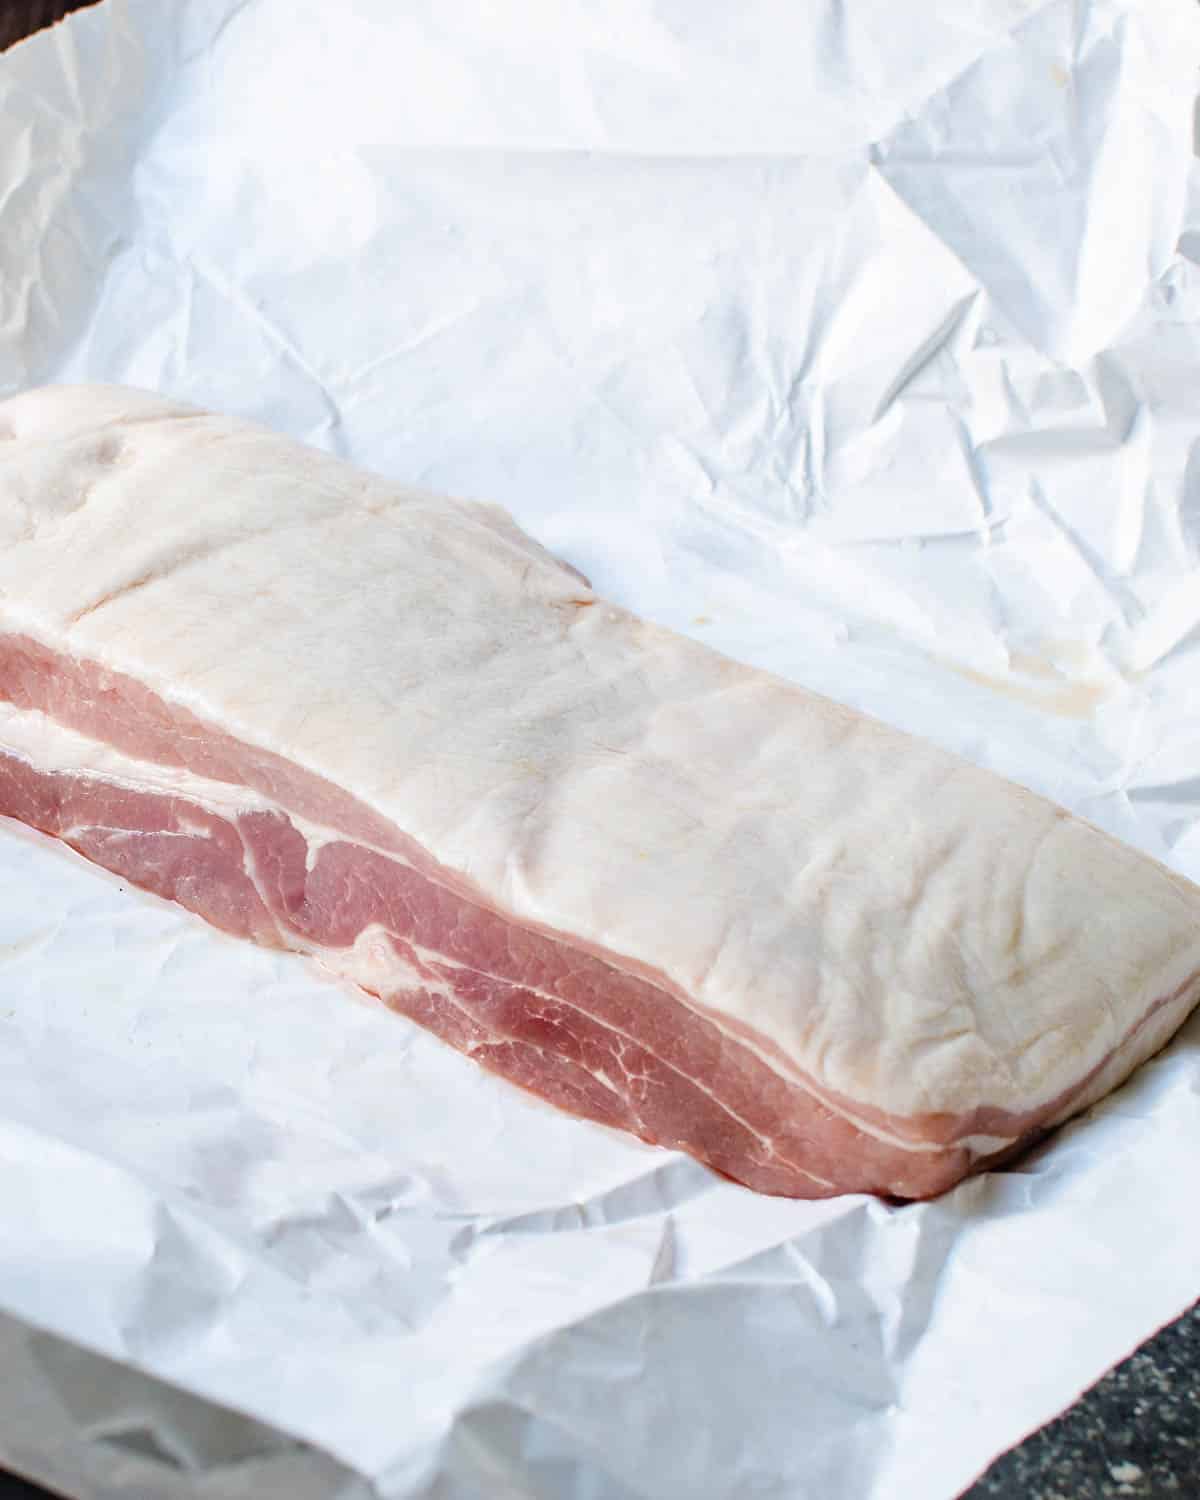 a slice of pork belly.